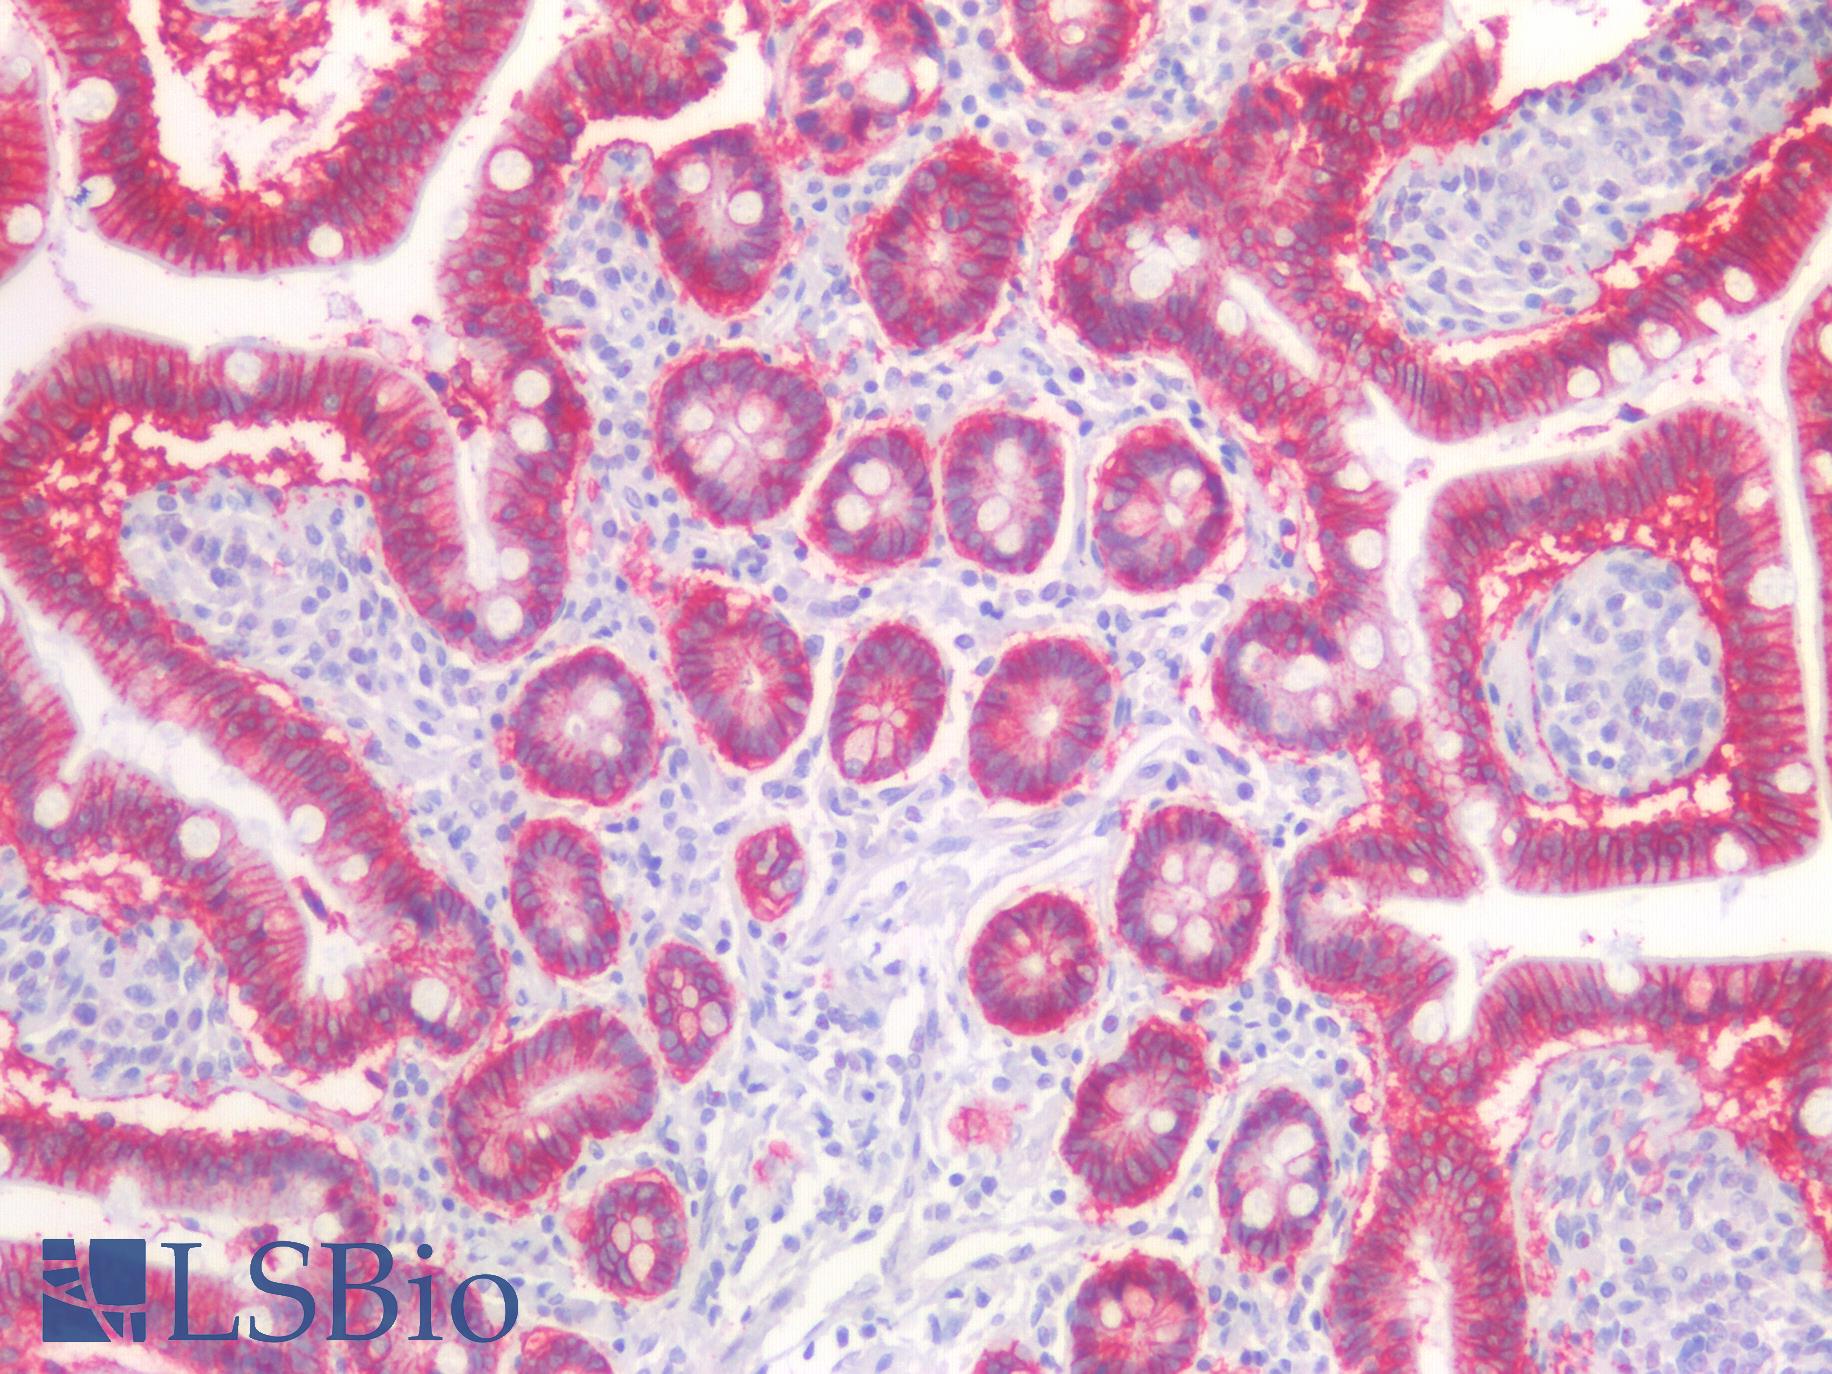 EPCAM Antibody - Human Small Intestine: Formalin-Fixed, Paraffin-Embedded (FFPE)